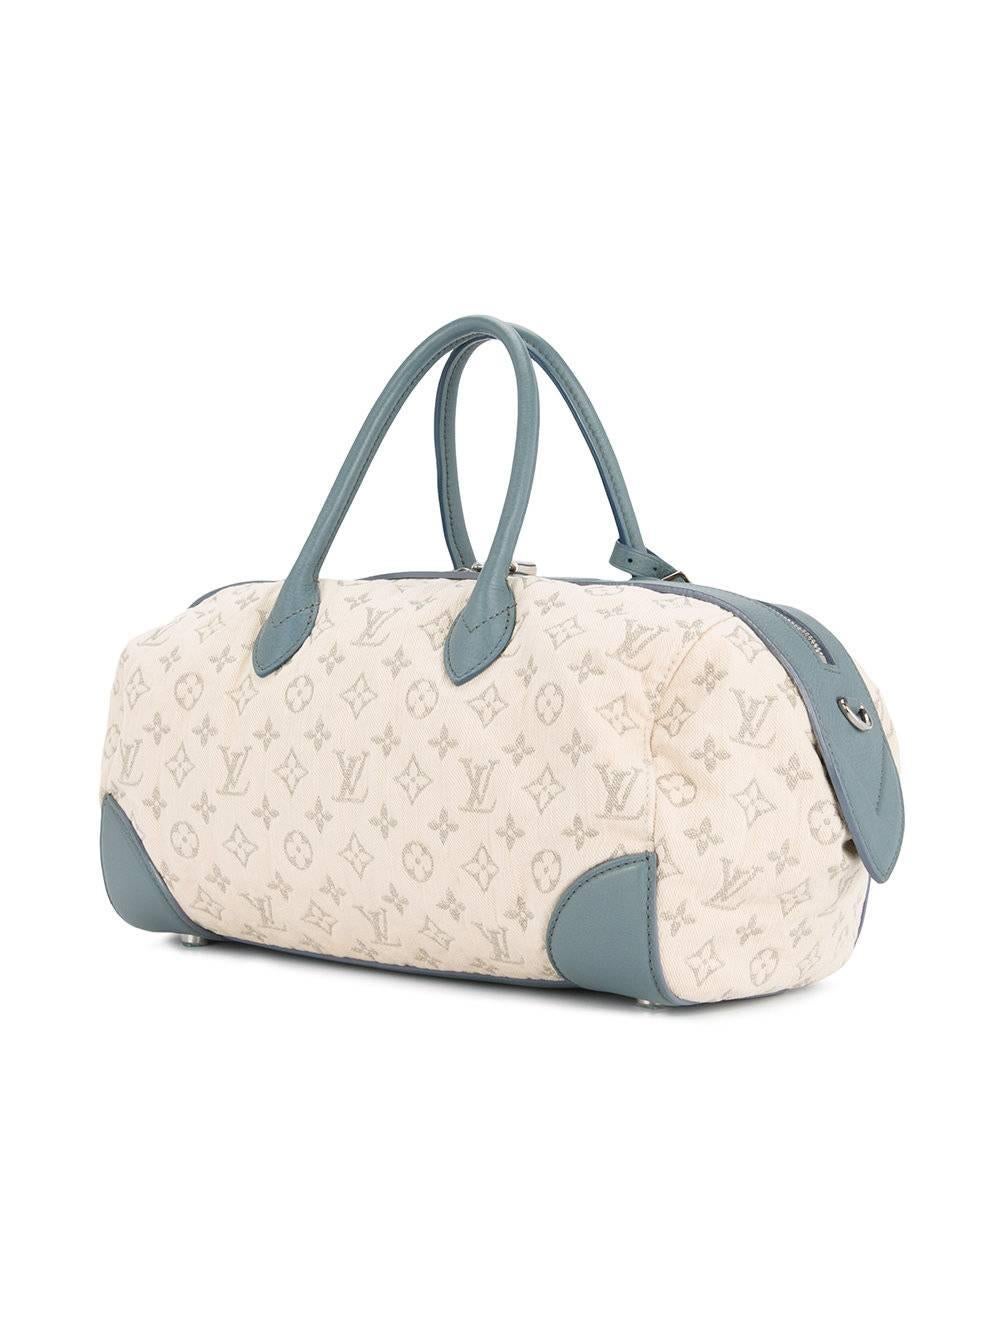 Gray Louis Vuitton Monogram Fabric Leather Carryall Top Handle Satchel Shoulder Bag